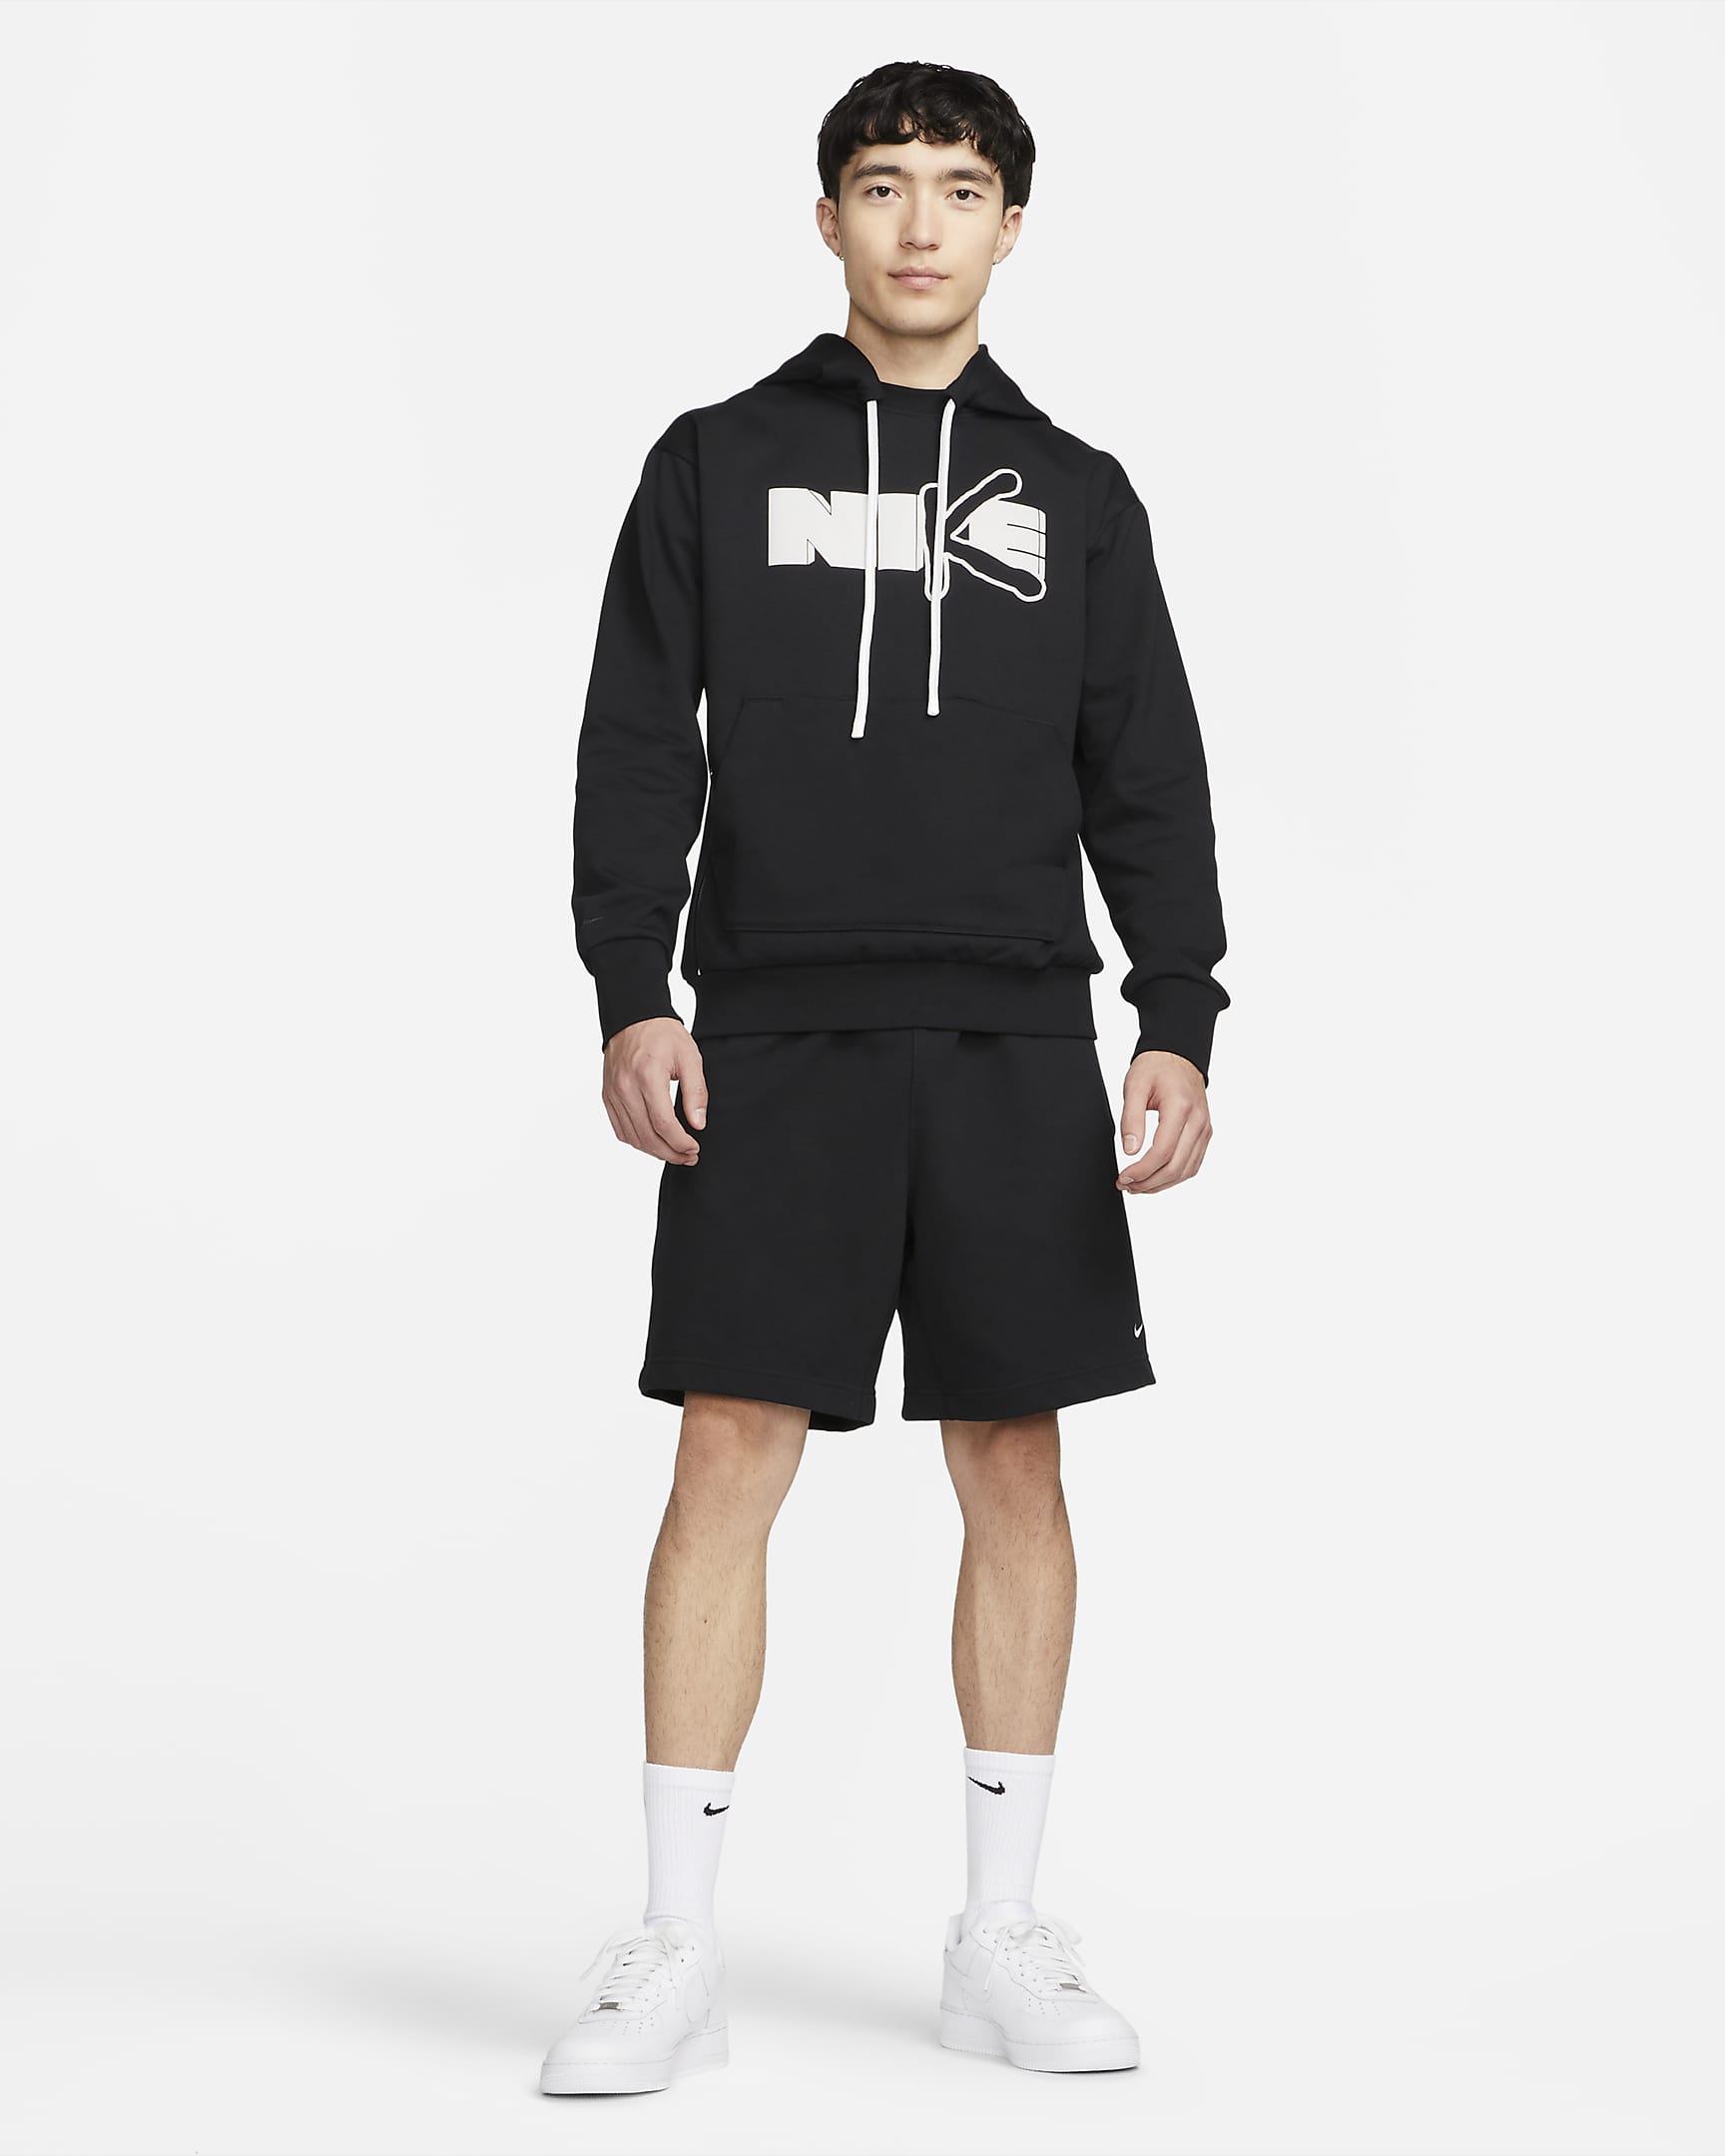 Nike Dri-FIT Standard Issue Men's Premium Pullover Basketball Hoodie ...